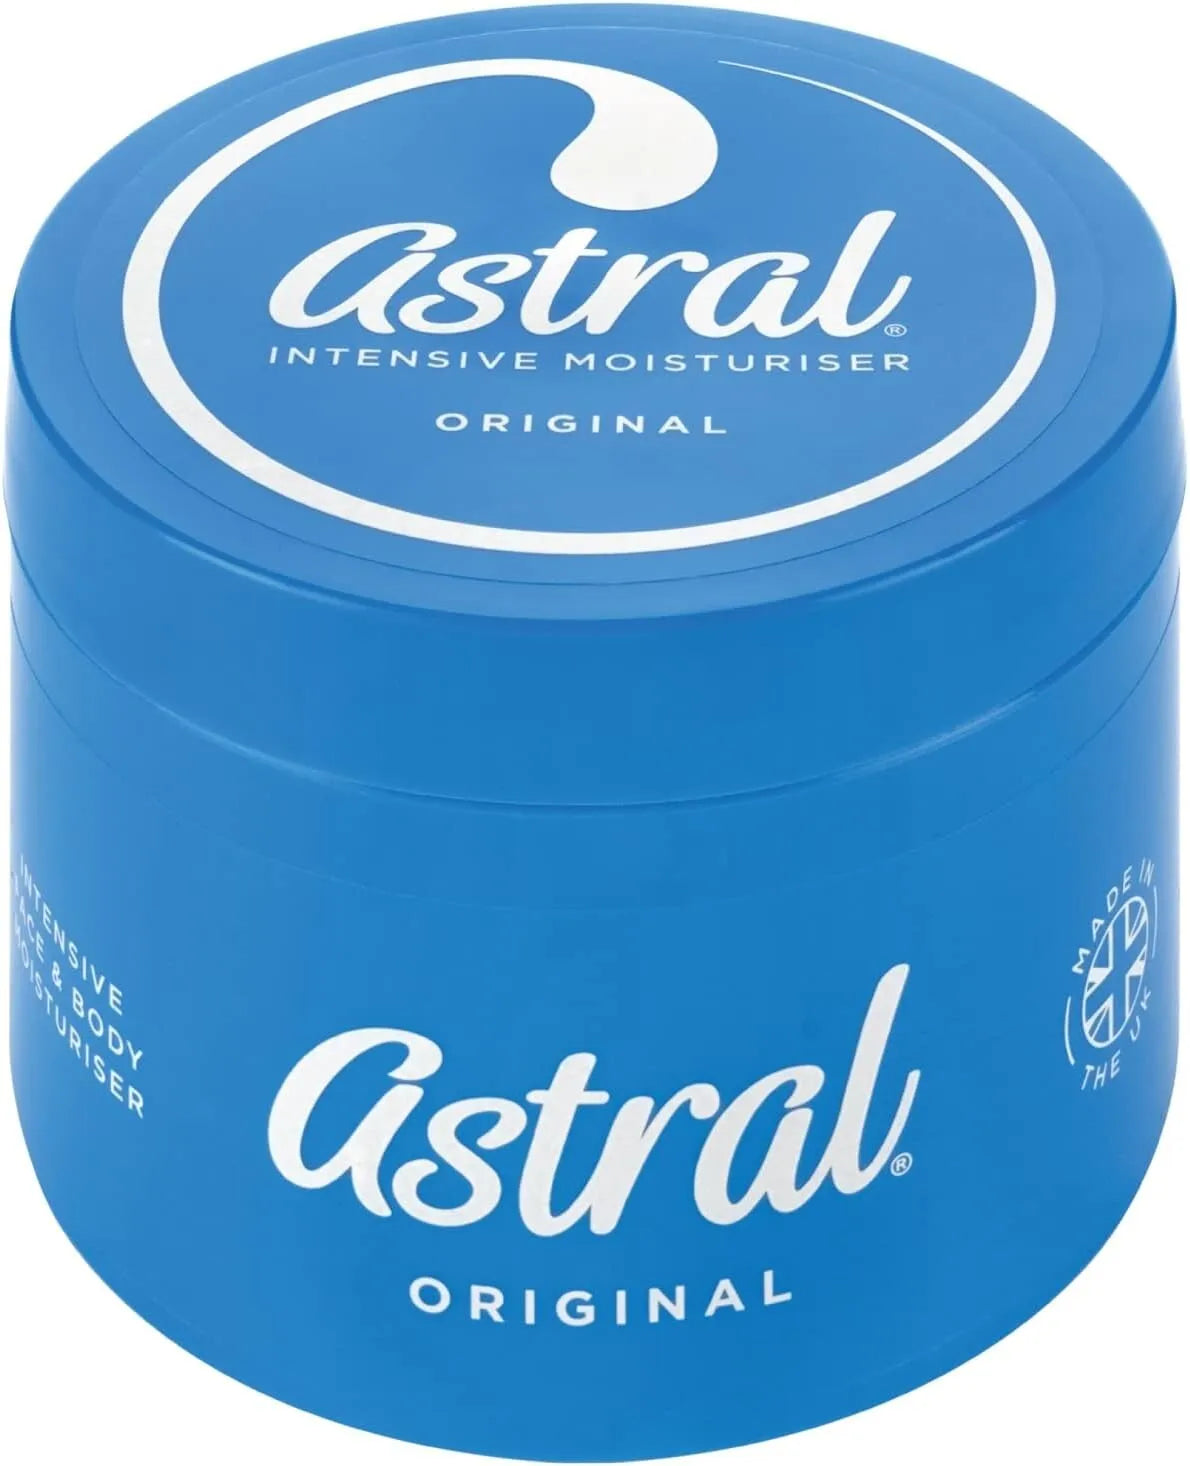 Astral Original Face & Body Intensive Moisturiser - Glycerine & petroleum jelly